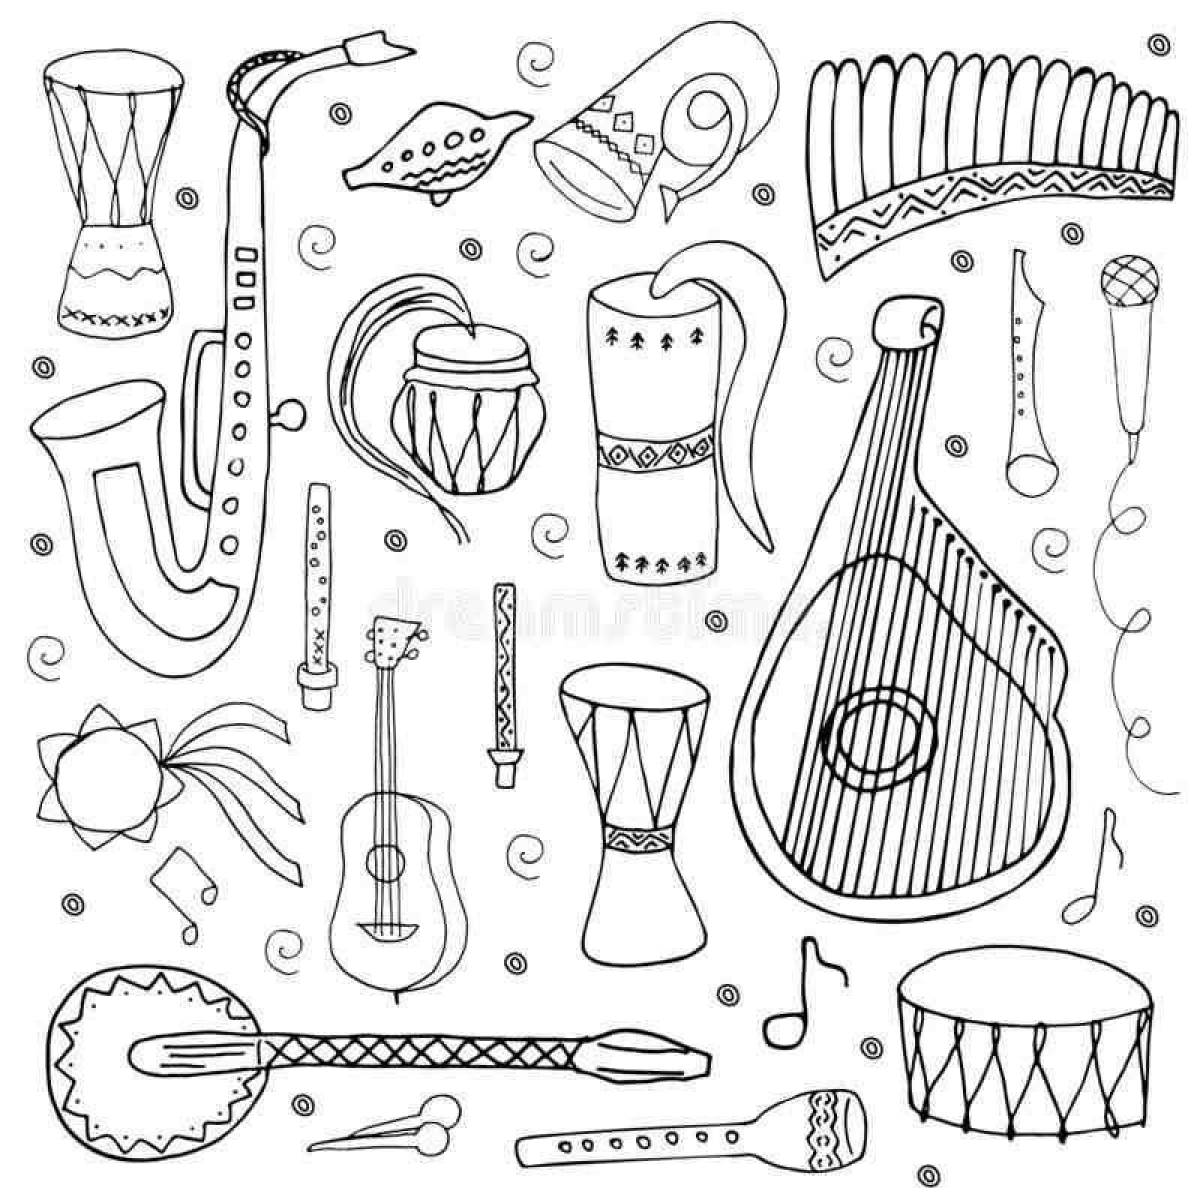 Folk musical instruments #12